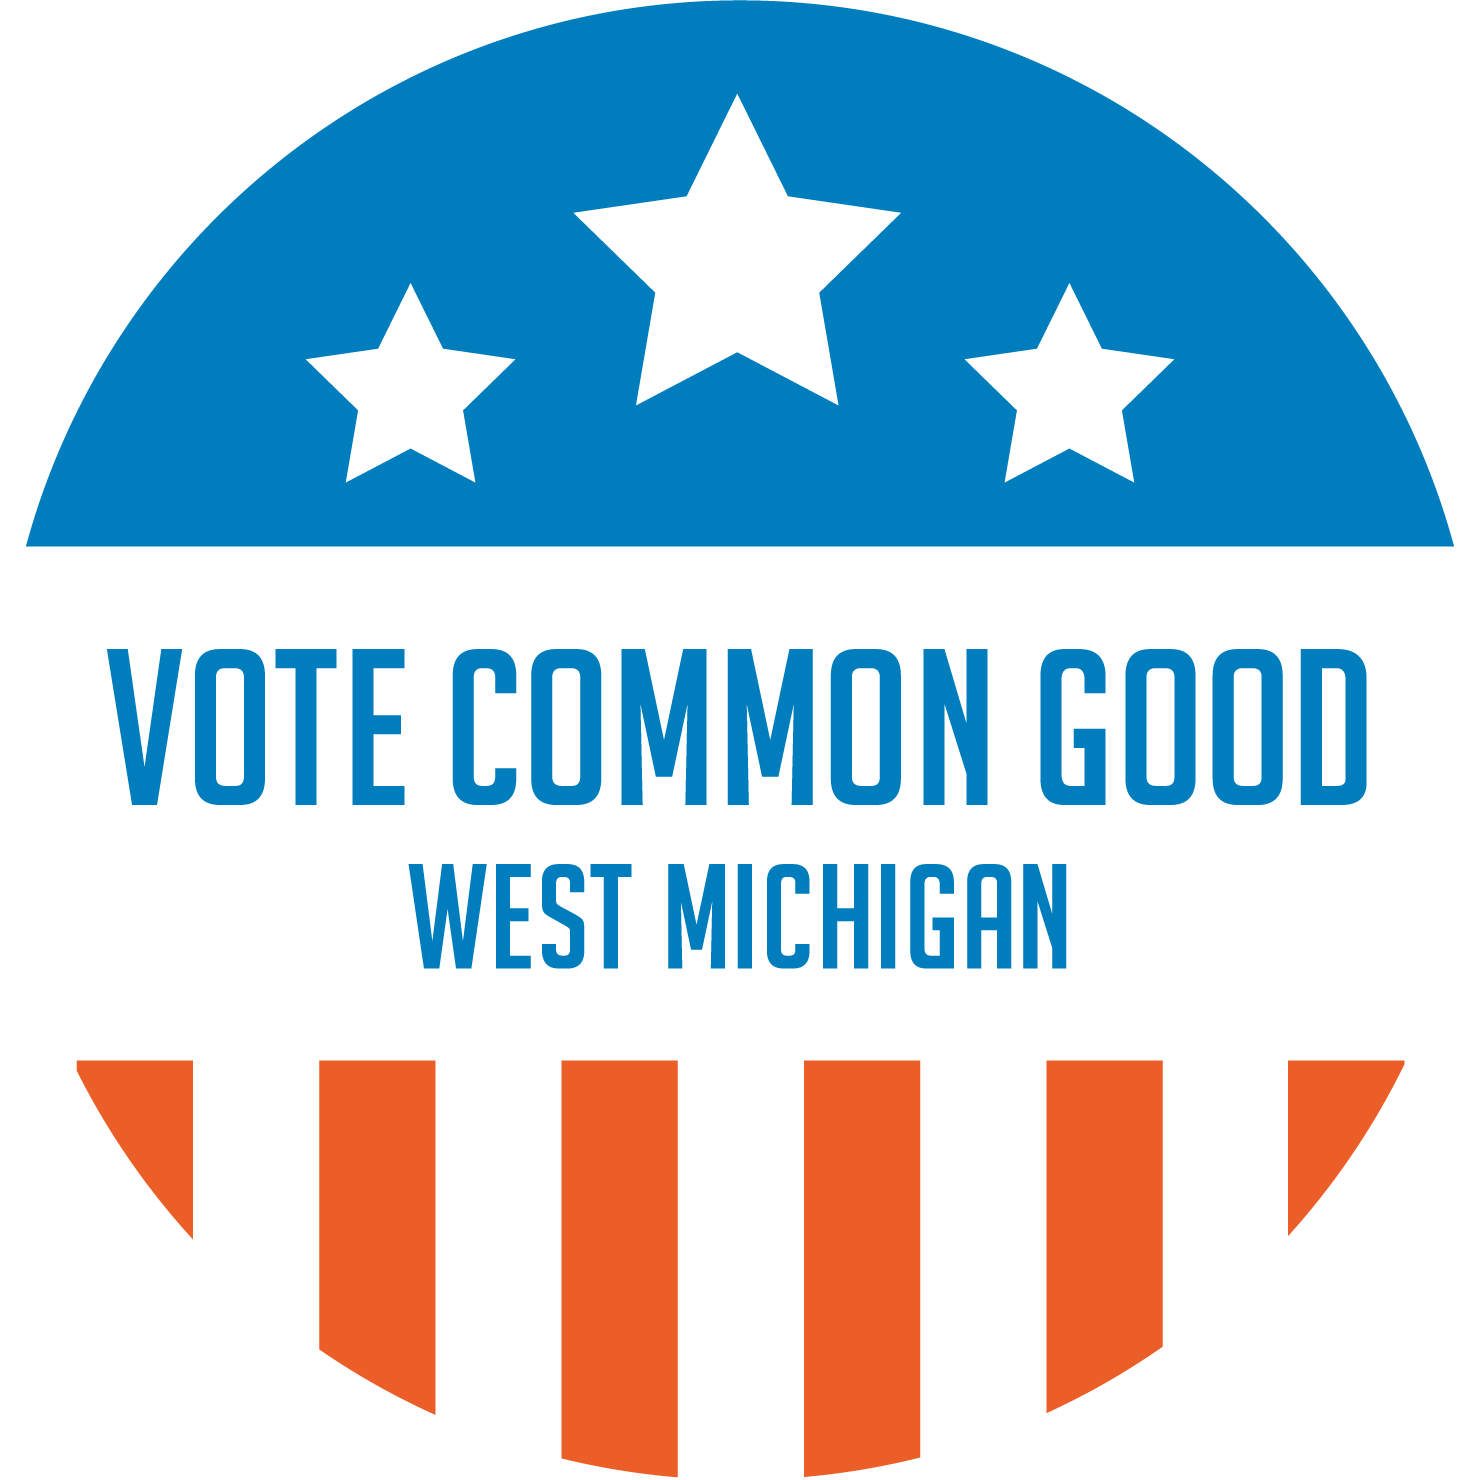 Vote Common Good: West Michigan